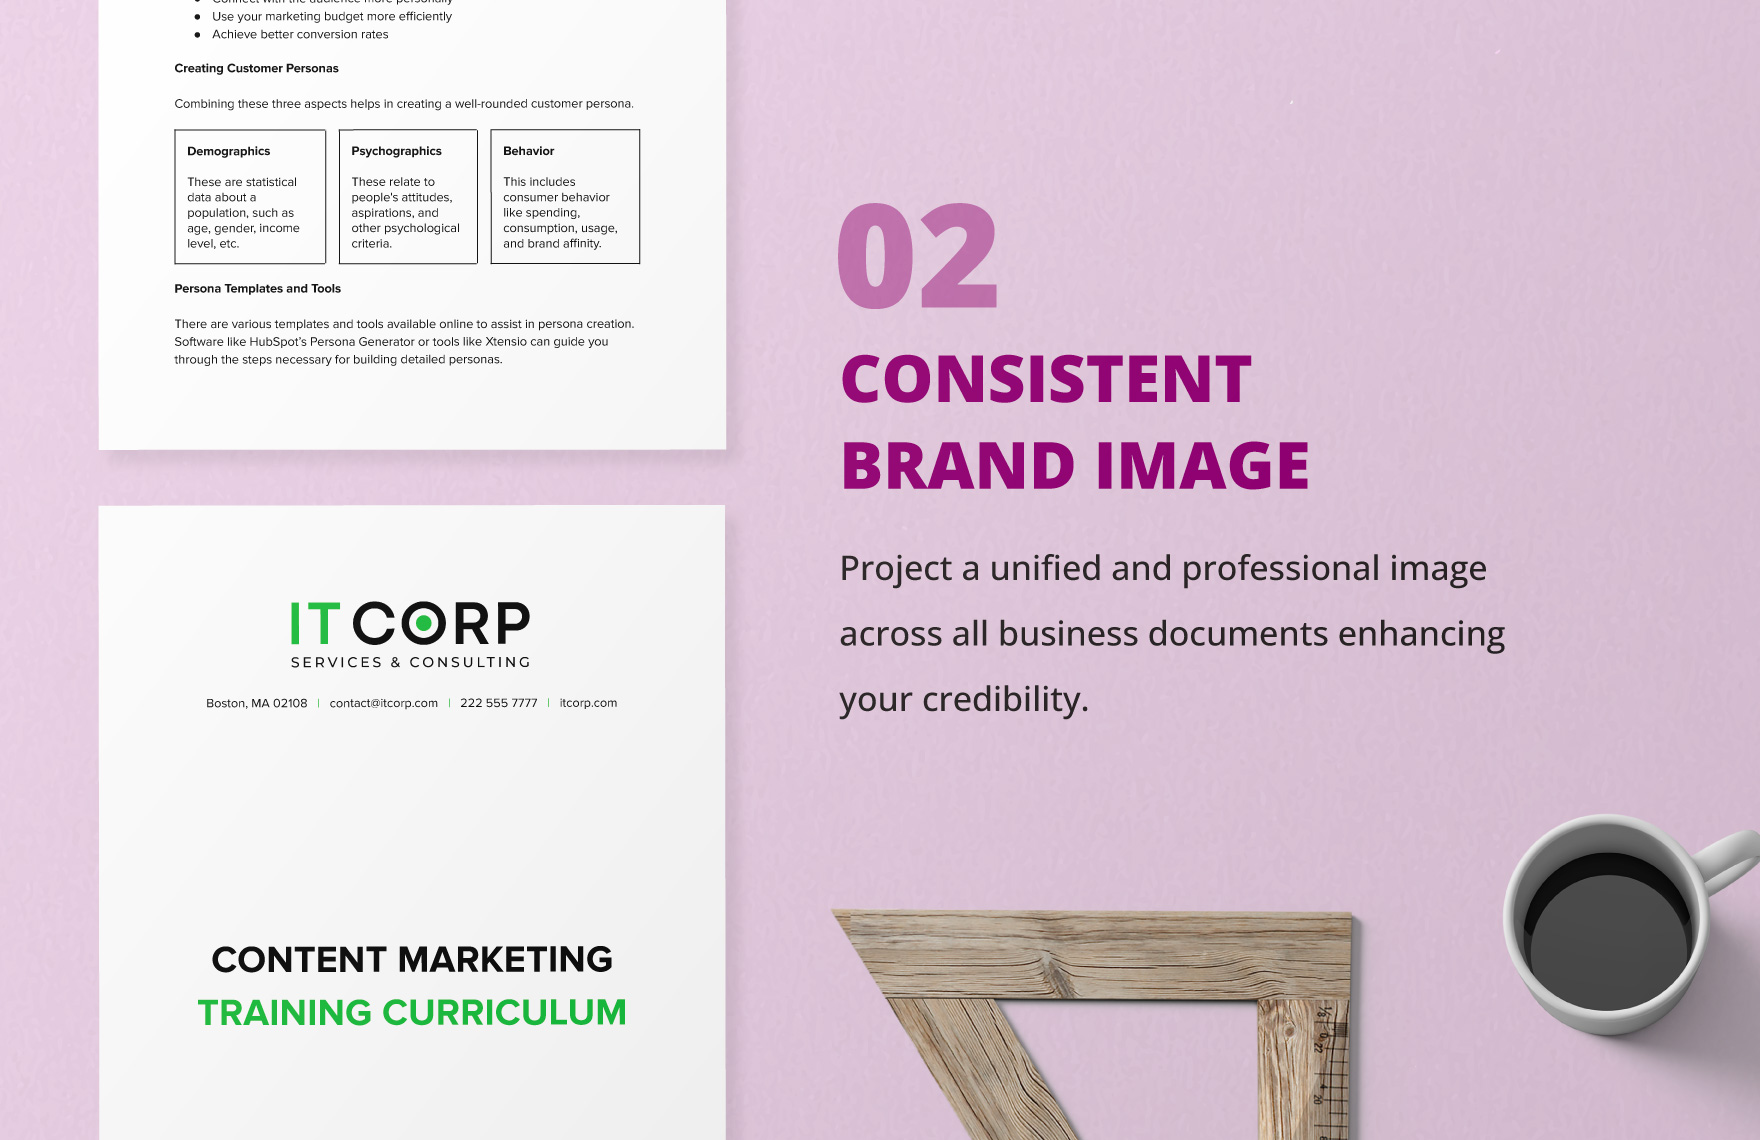 Content Marketing Training Curriculum Template